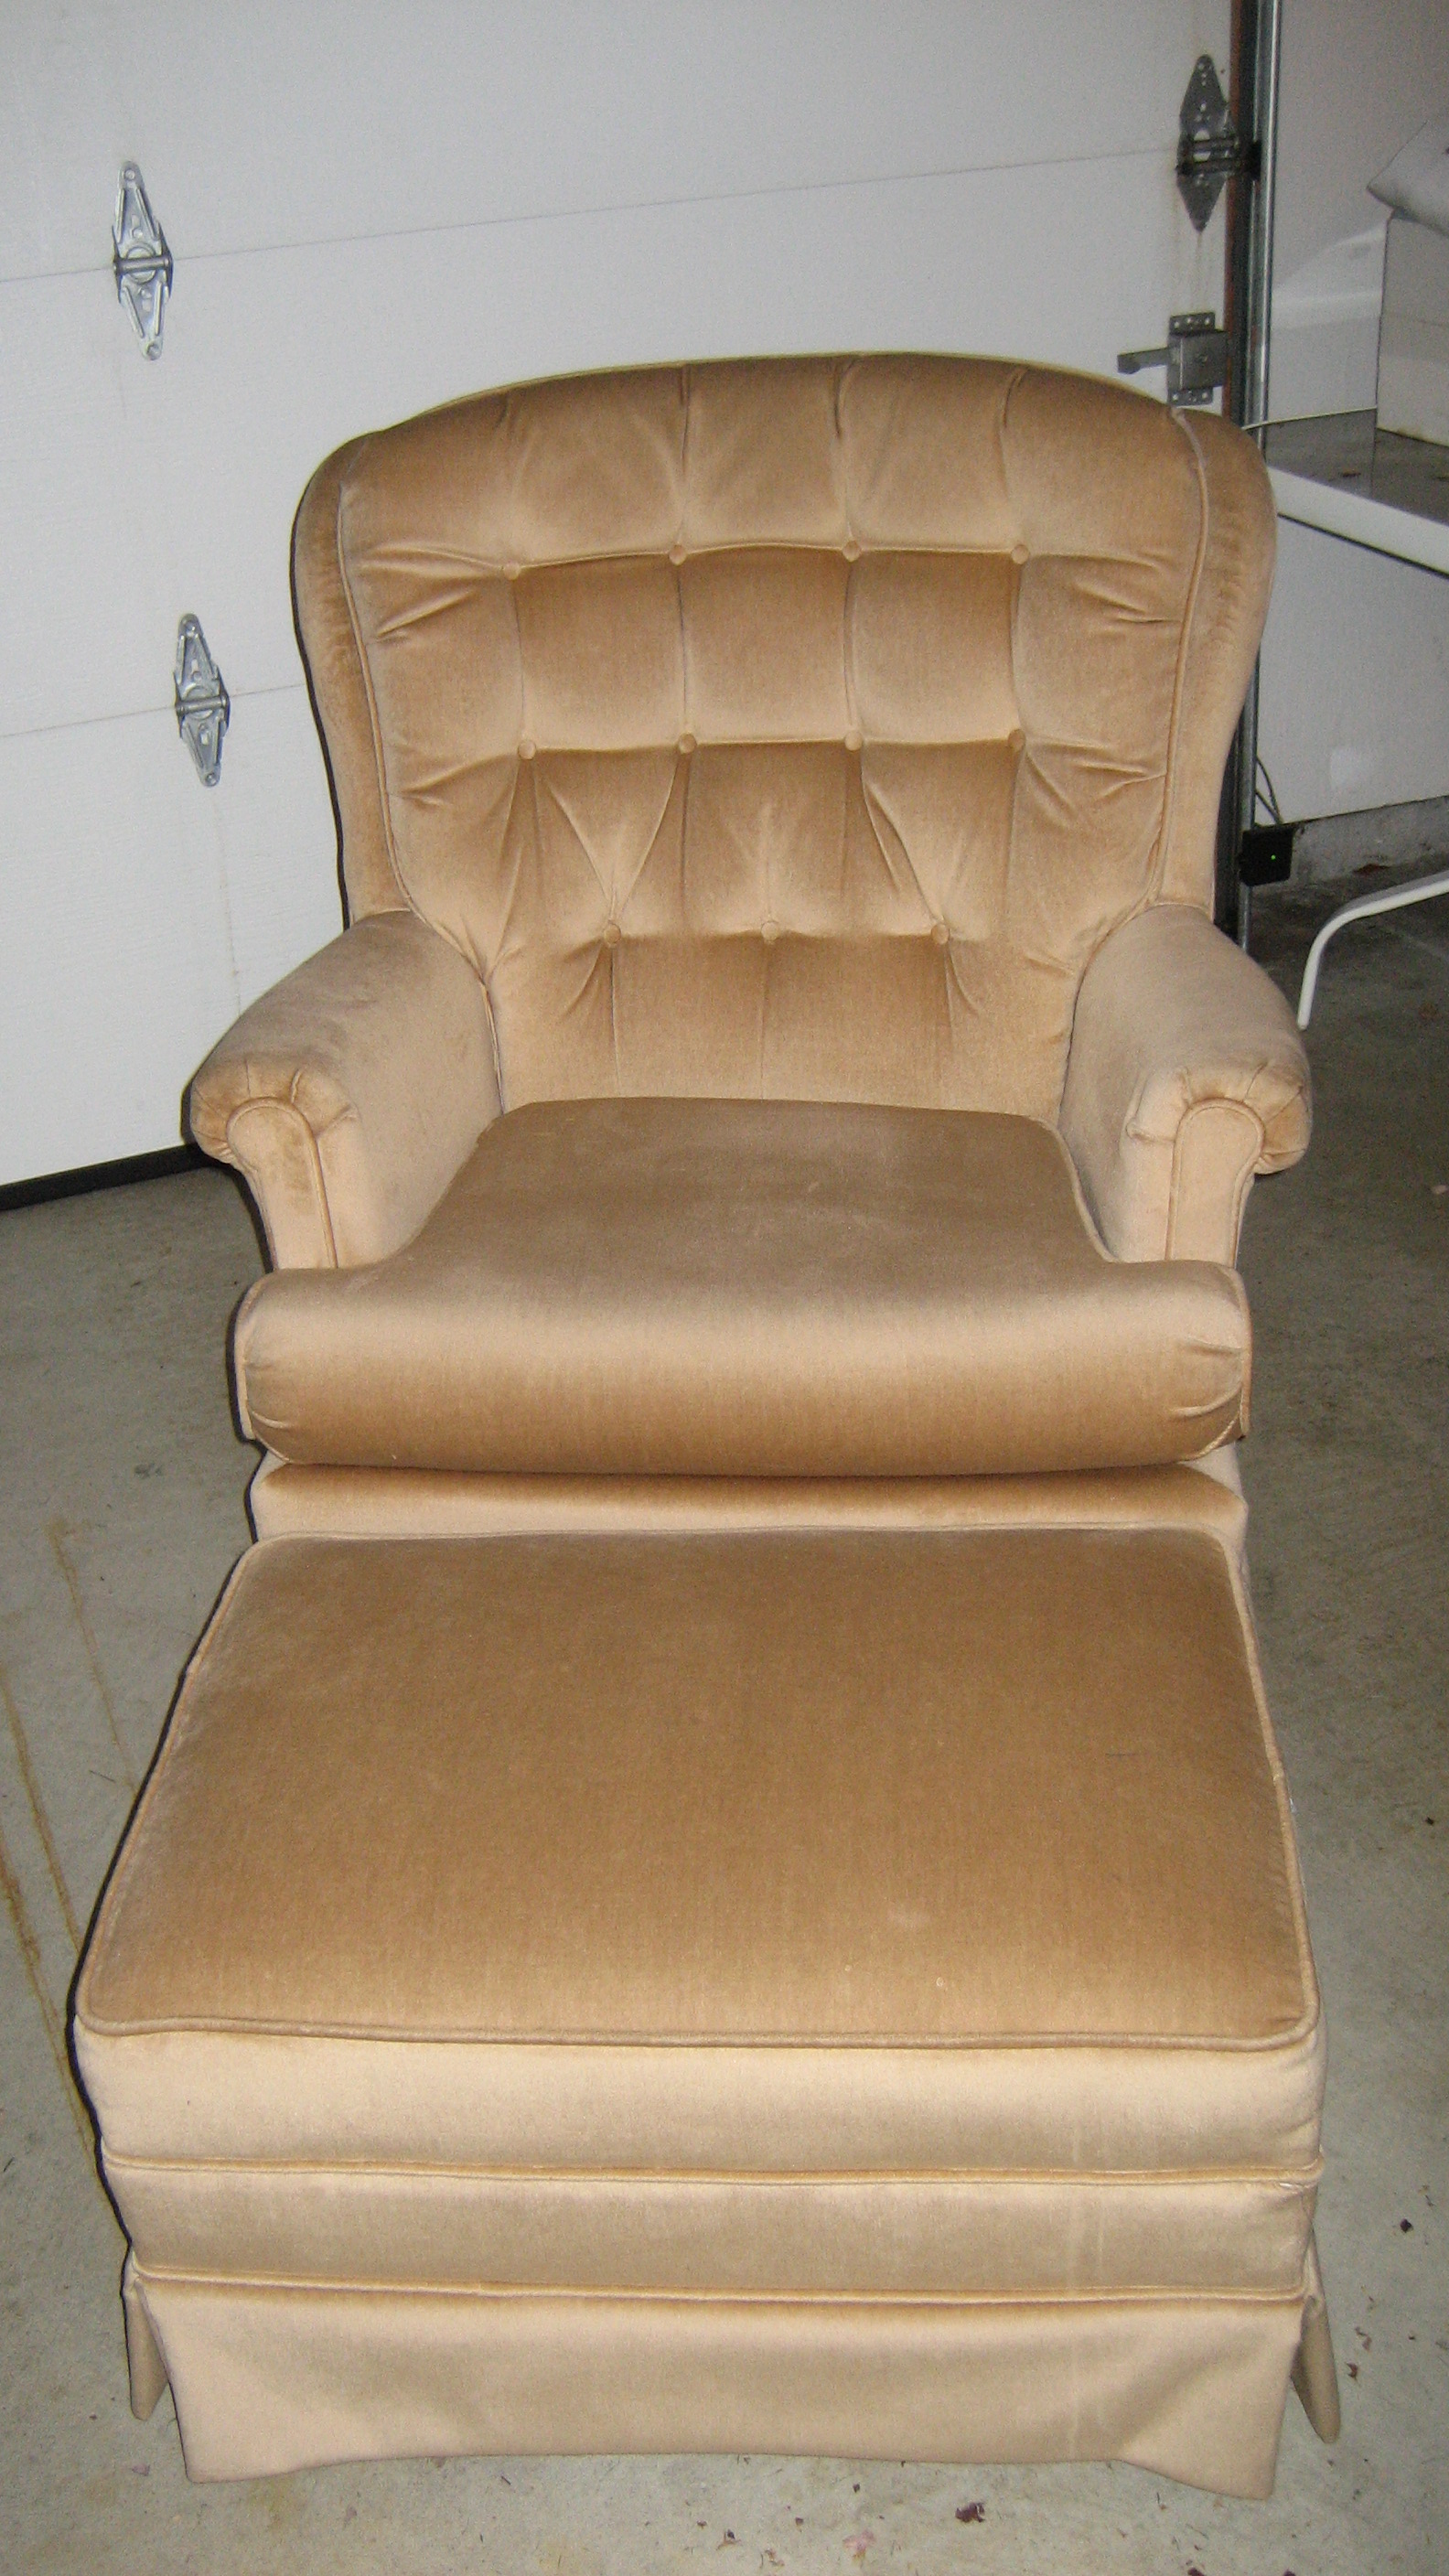 Swivel rocker chair w/ matching ottoman